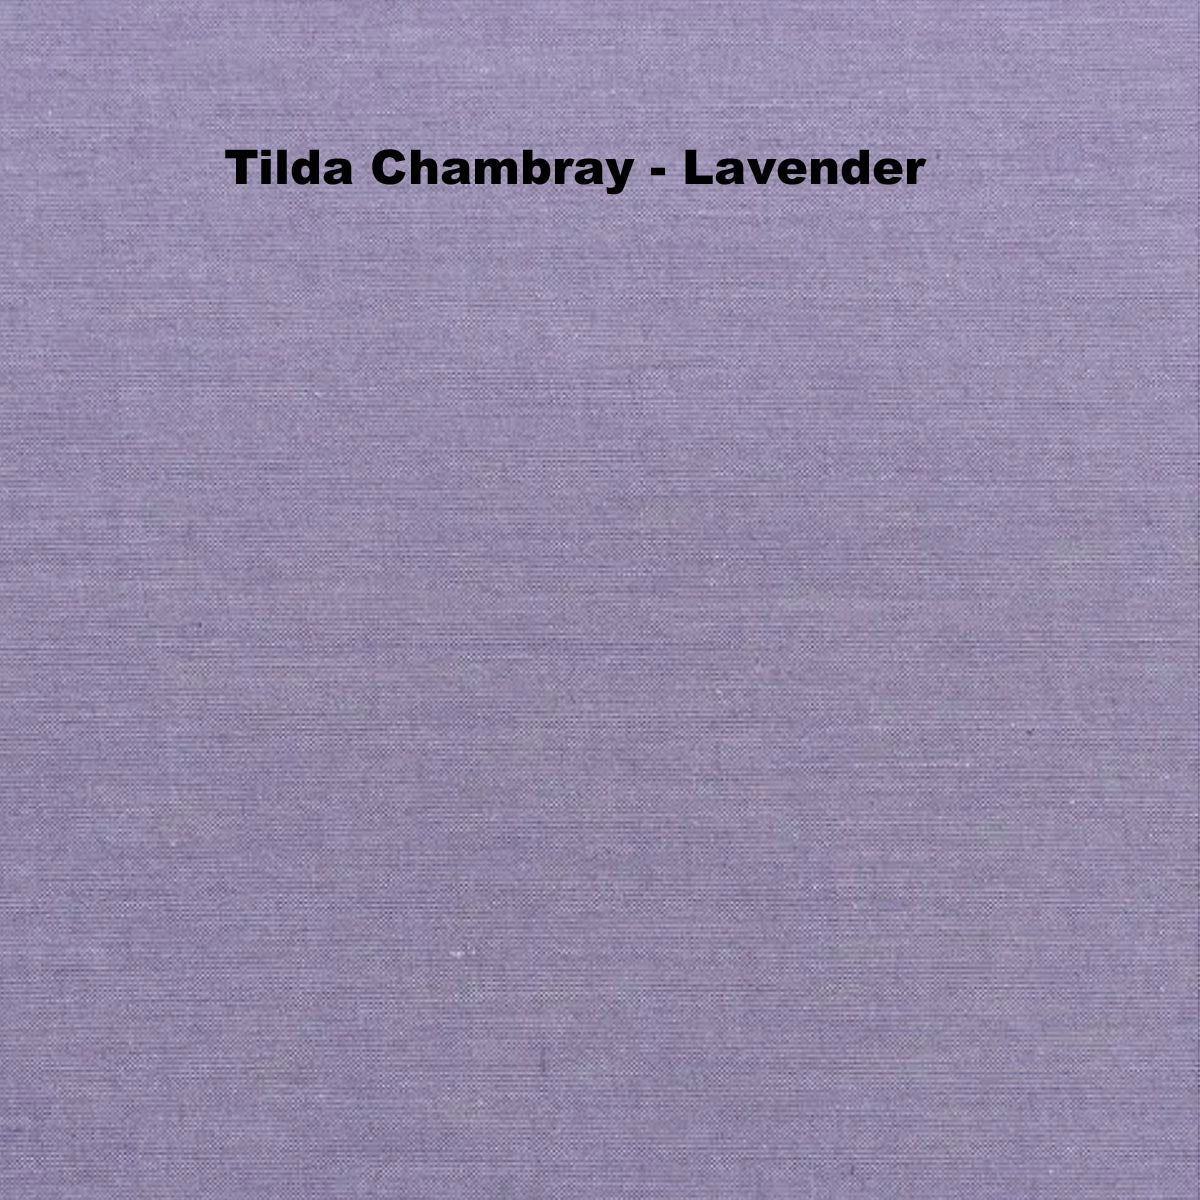 Tilda Chambray - Lavender #160009